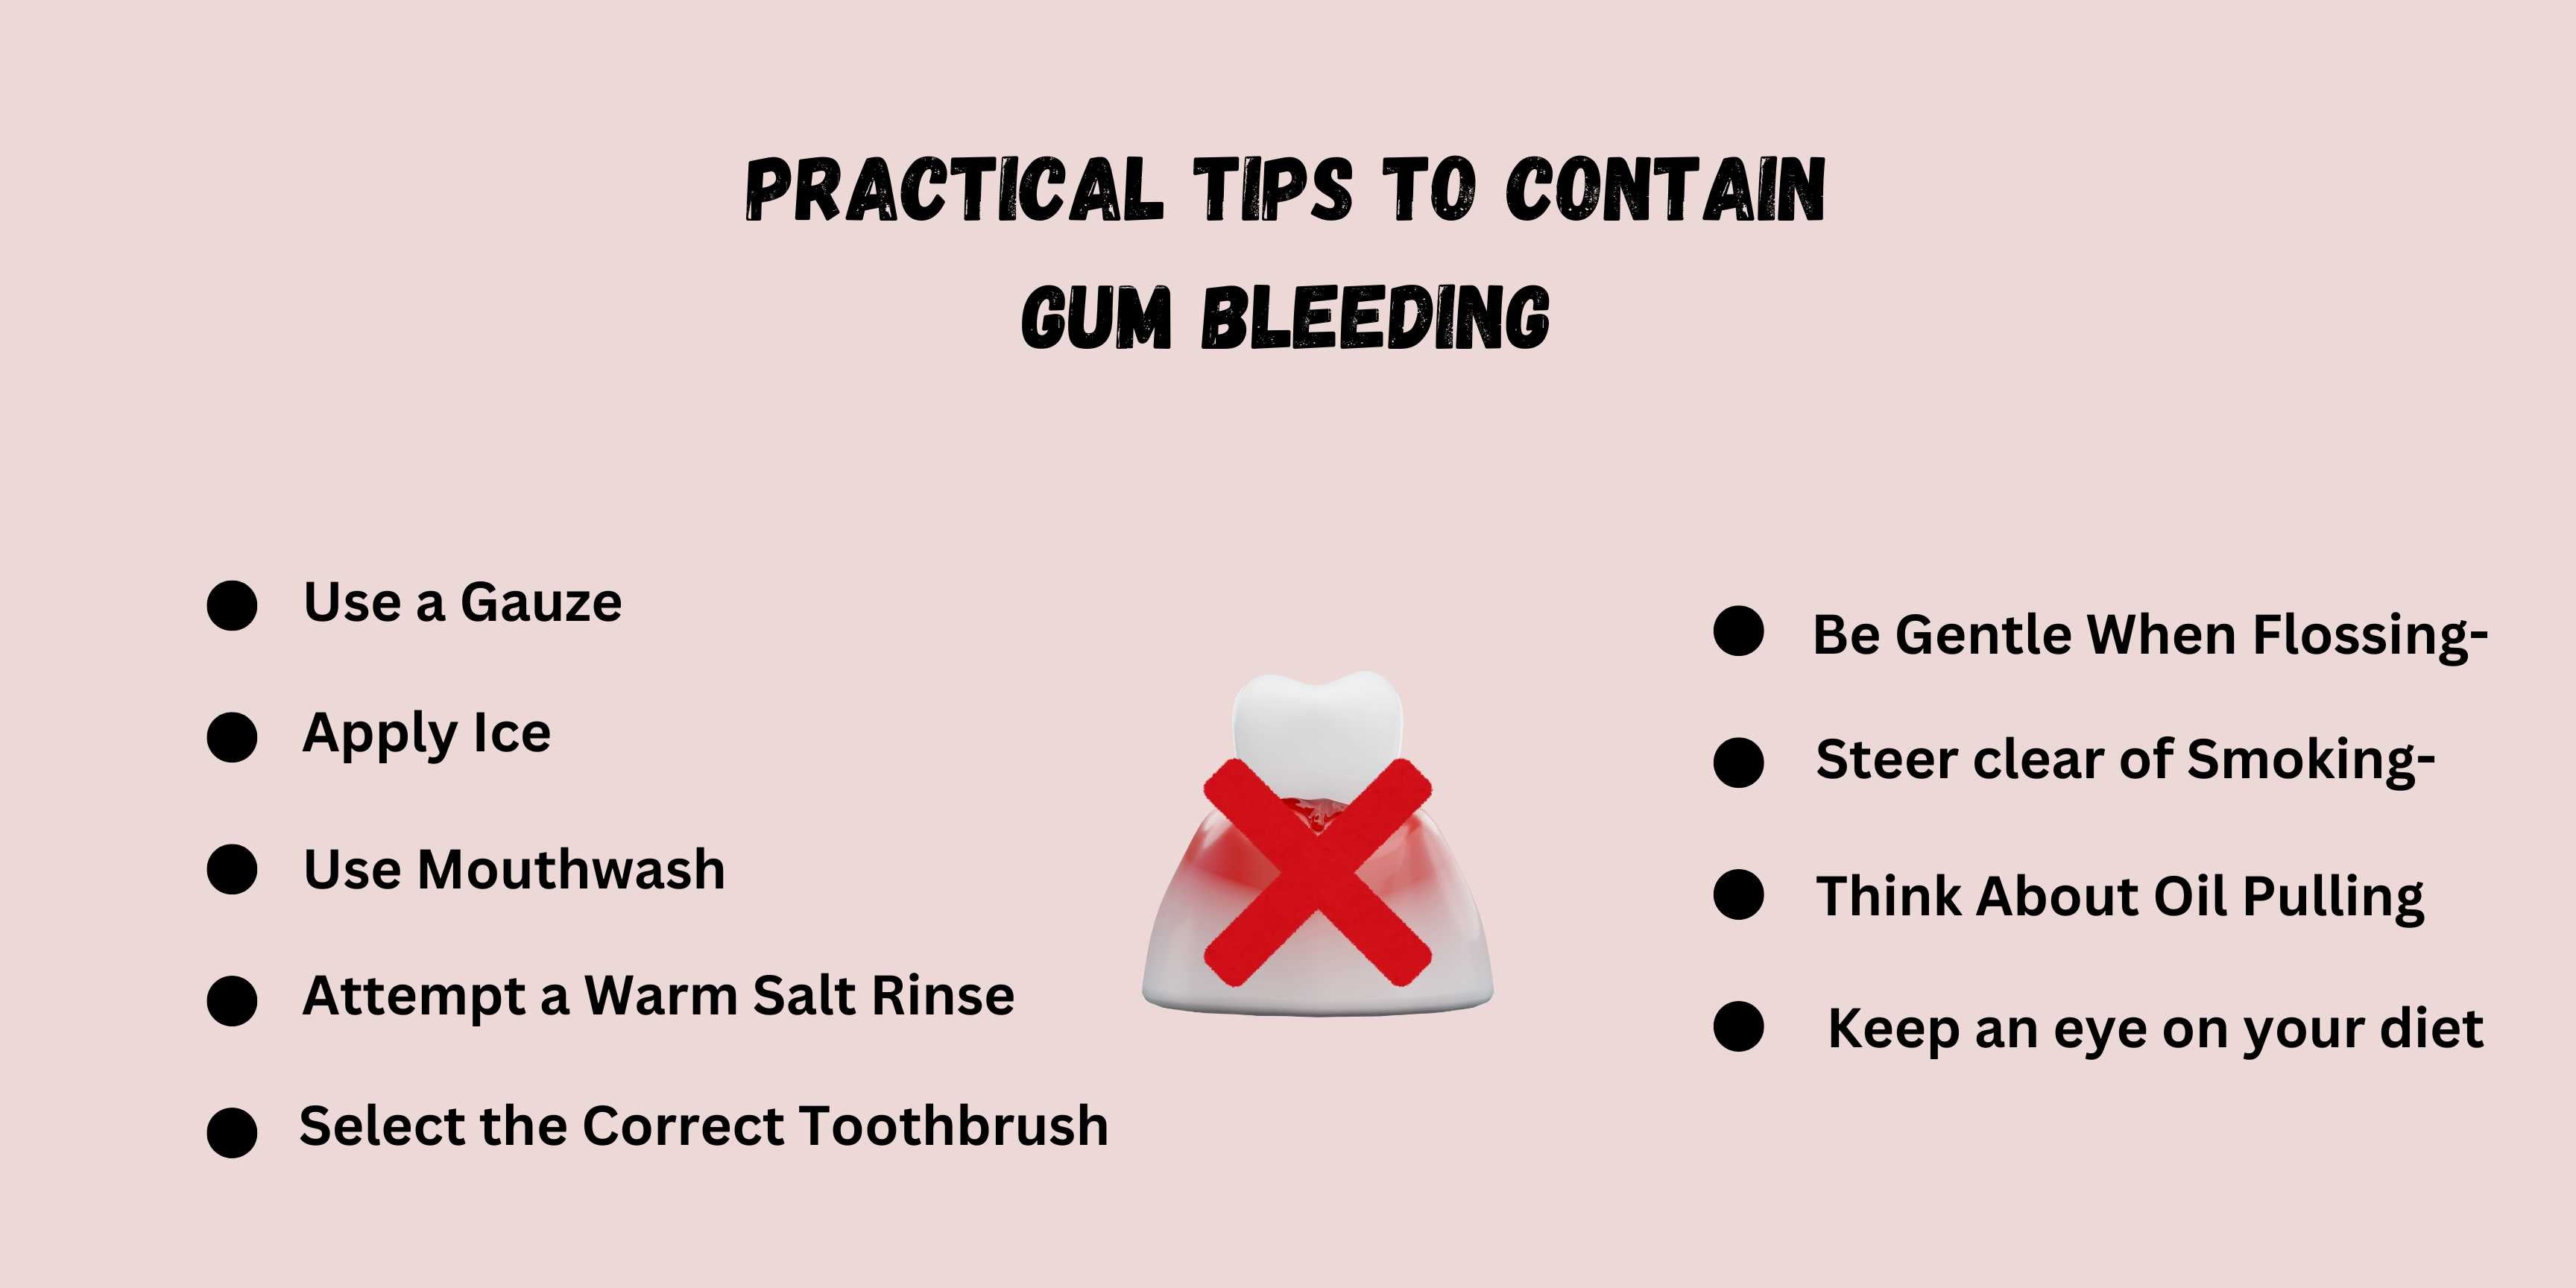 Practical tips to contain gum bleeding